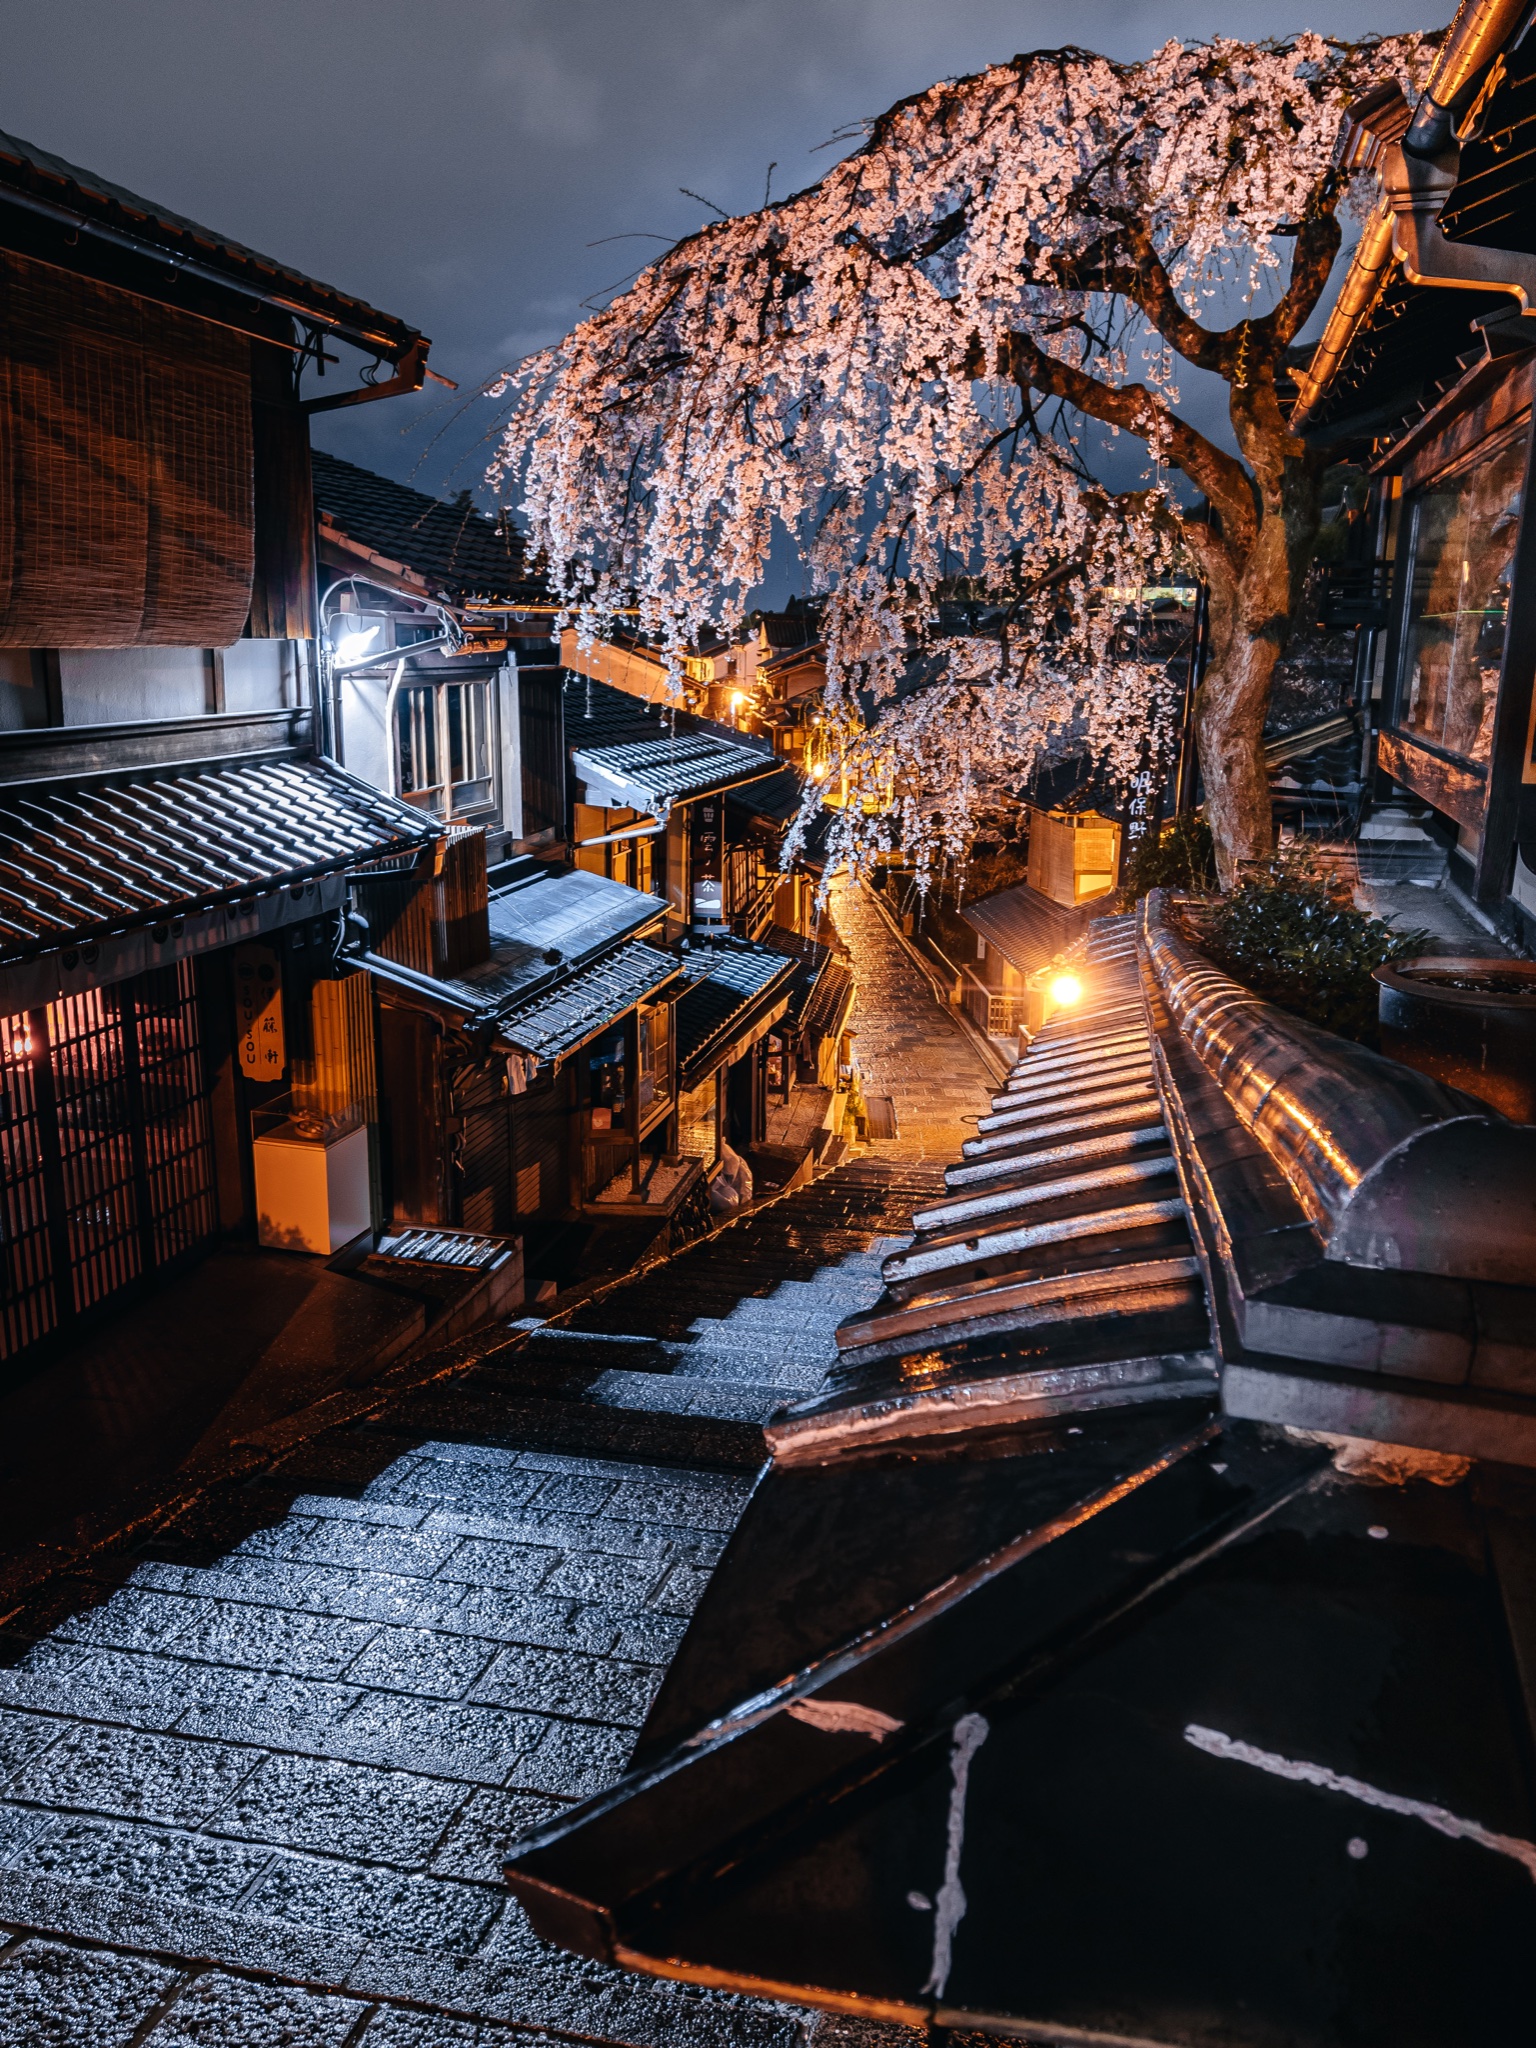 Twitter 上的 Szuna 京都の夜桜が綺麗でした T Co 0f9zzcx0ek Twitter